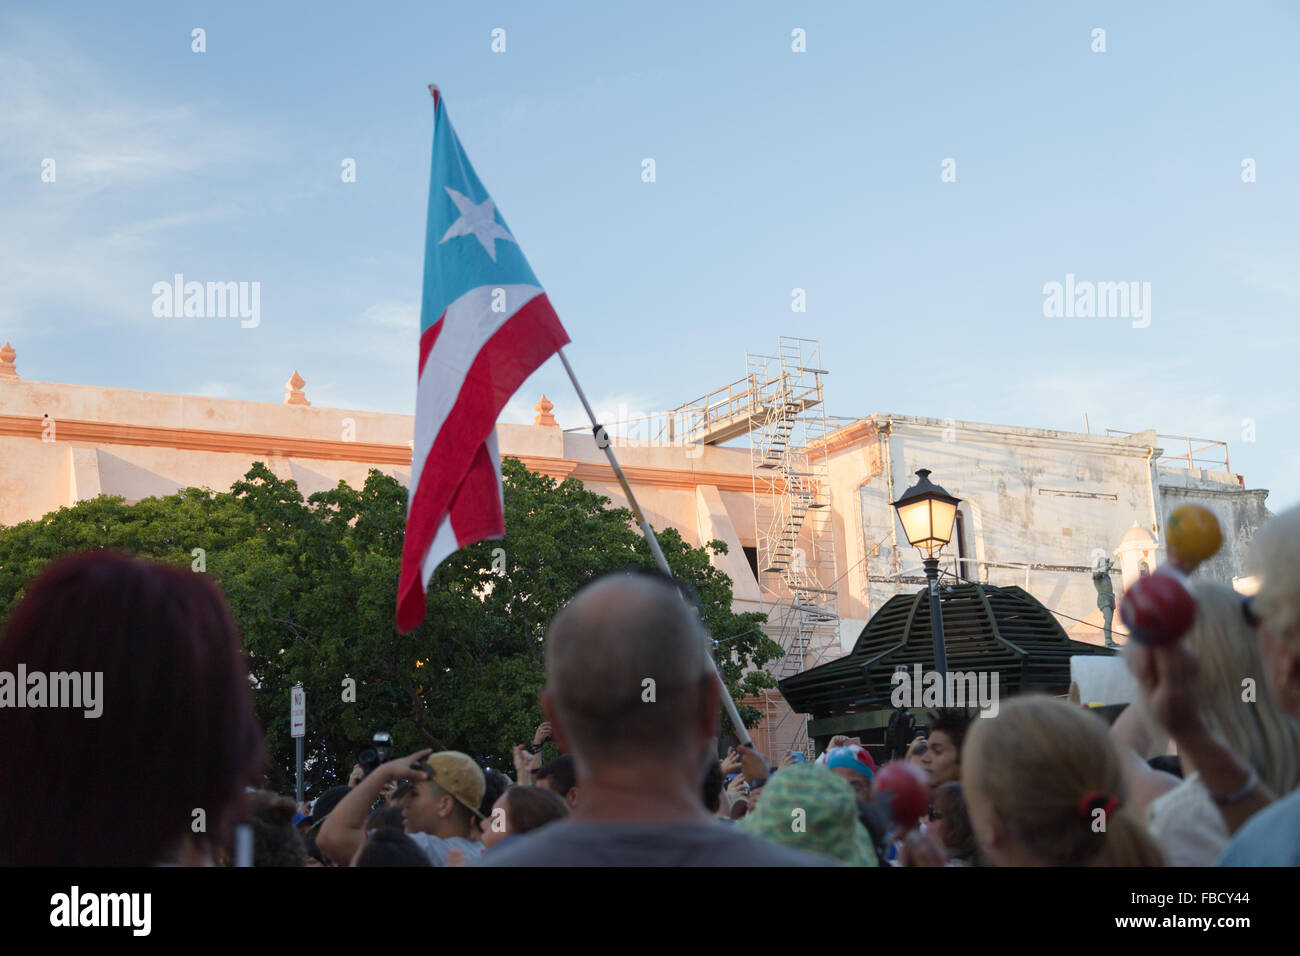 San Juan, Puerto Rico. 14th January, 2016. A person carries a Puerto Rican flag at the San Sebastian Street Festival. Maria S./Alamy Live News Stock Photo